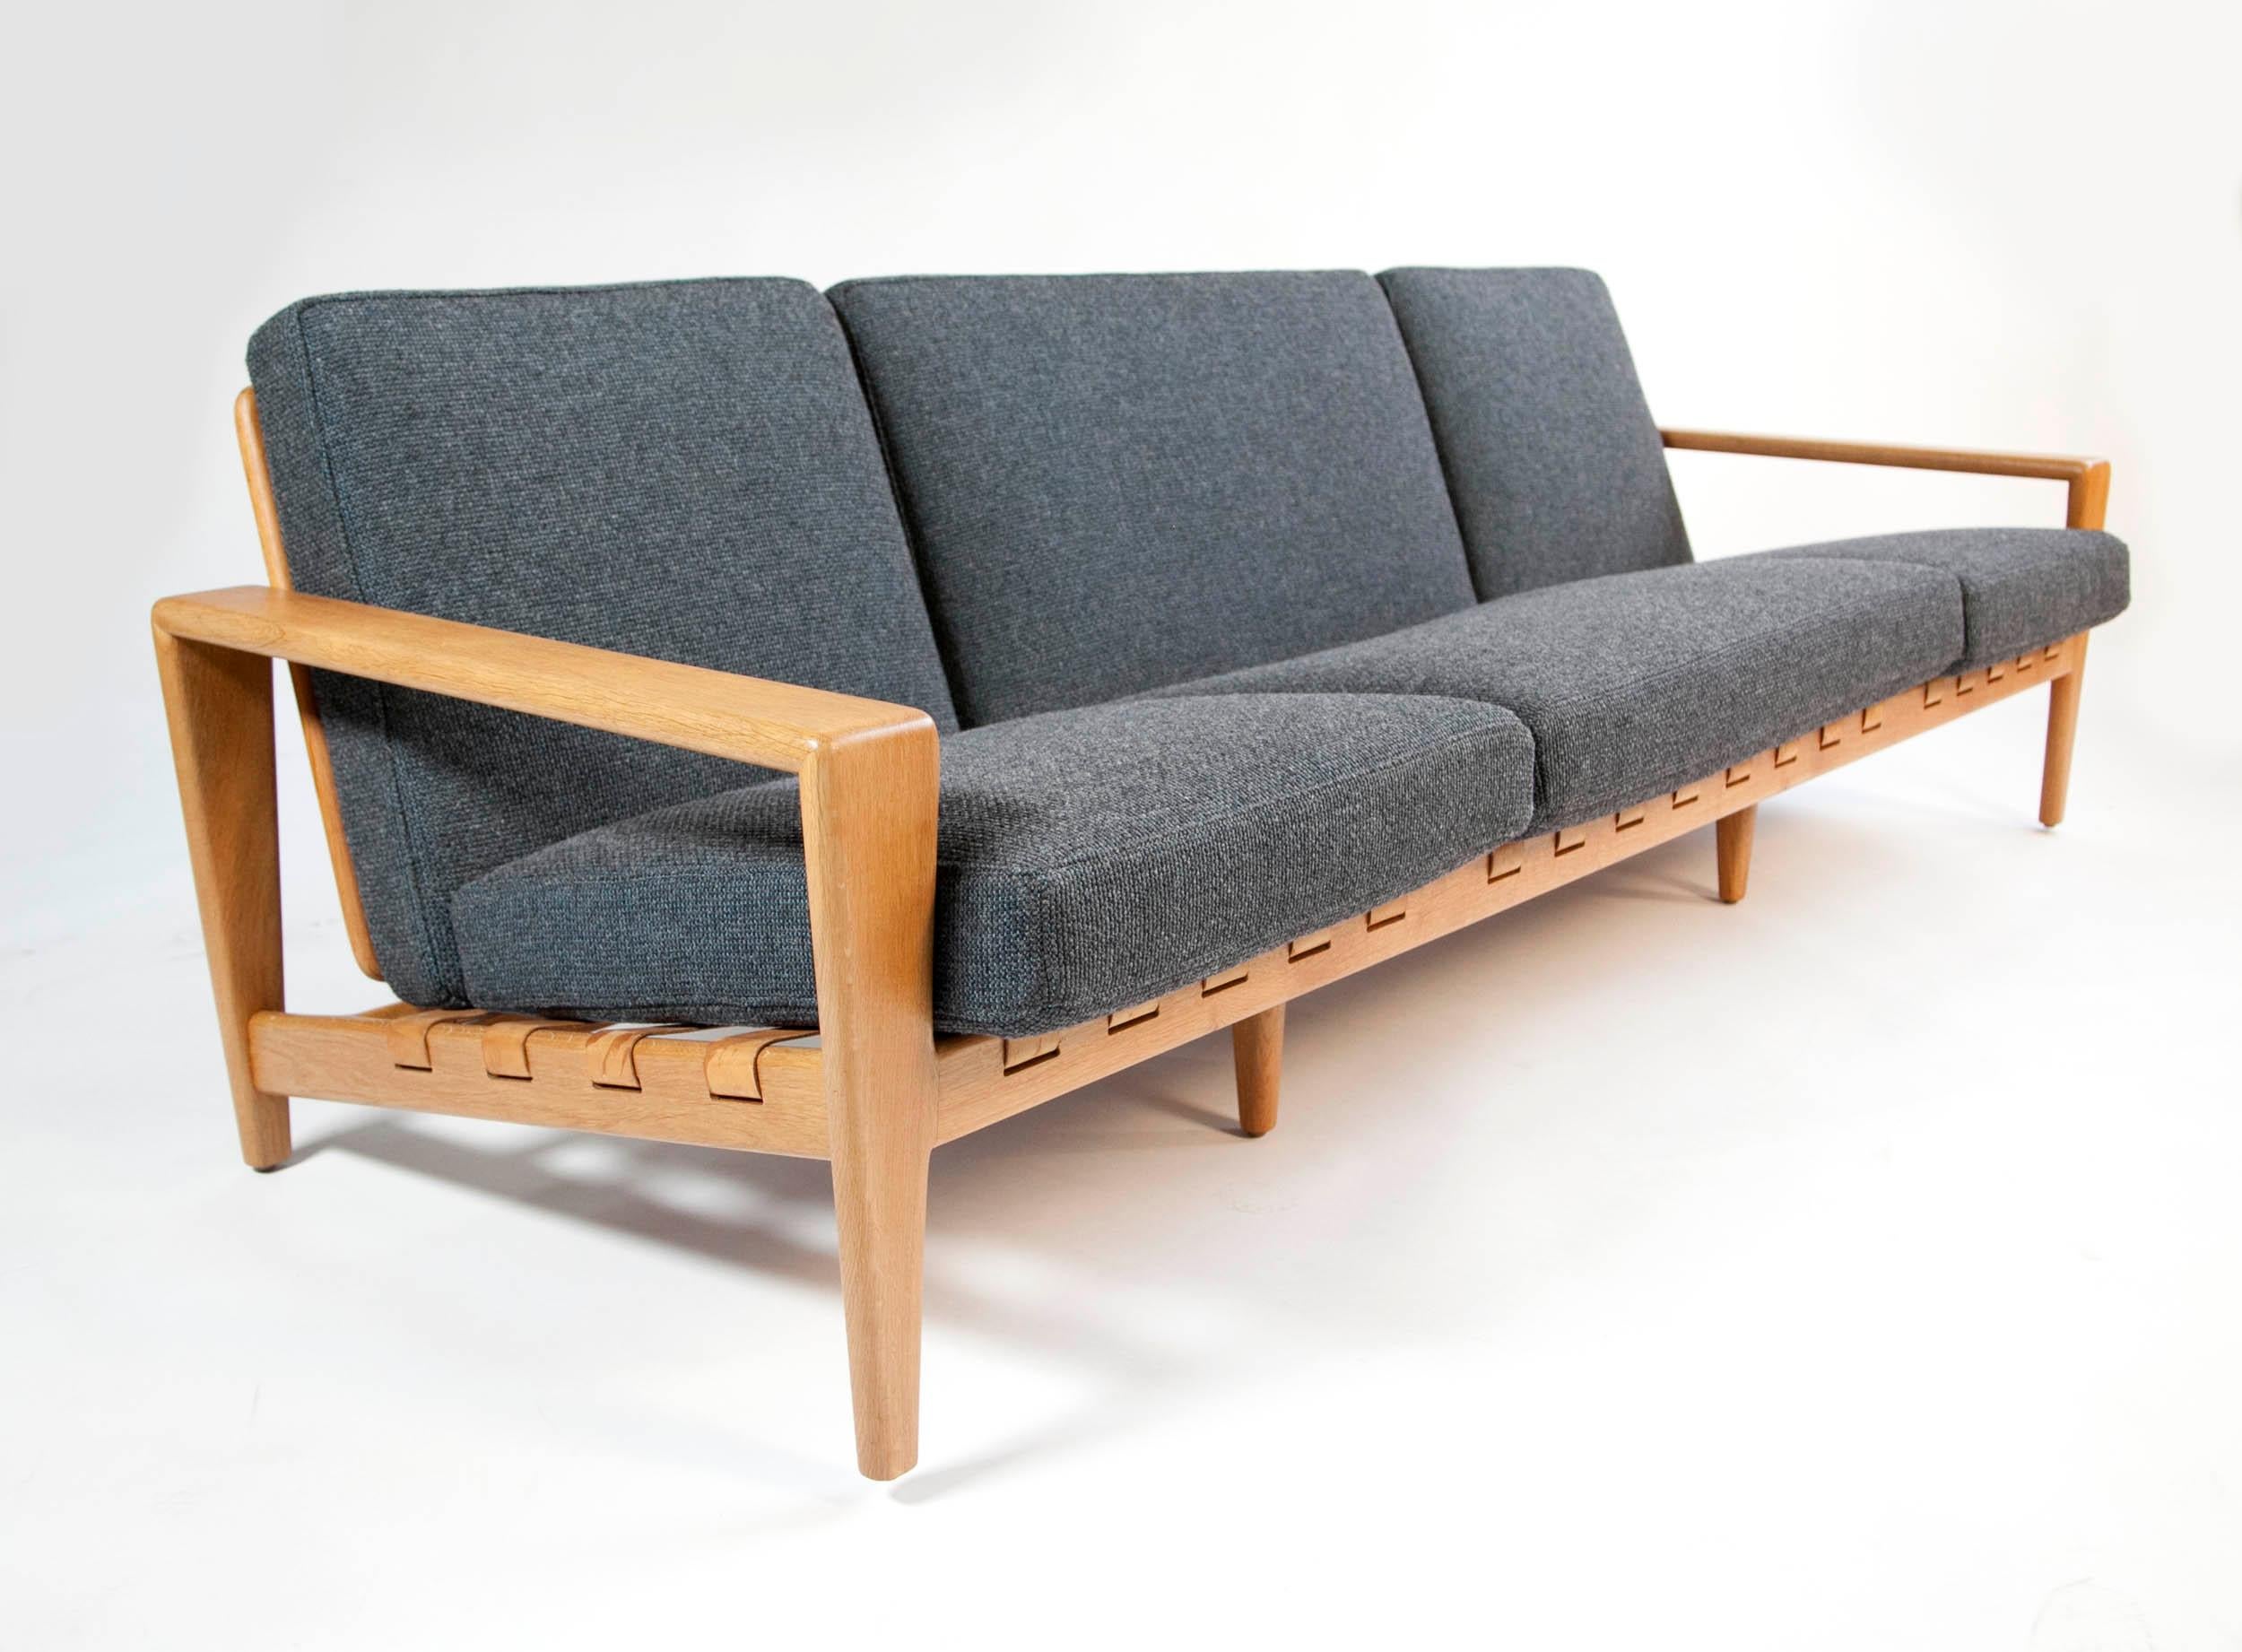 Svante Skogh Four-Seat Bodö Sofa by Seffle Möbelfabrik in Sweden, 1960s For Sale 8